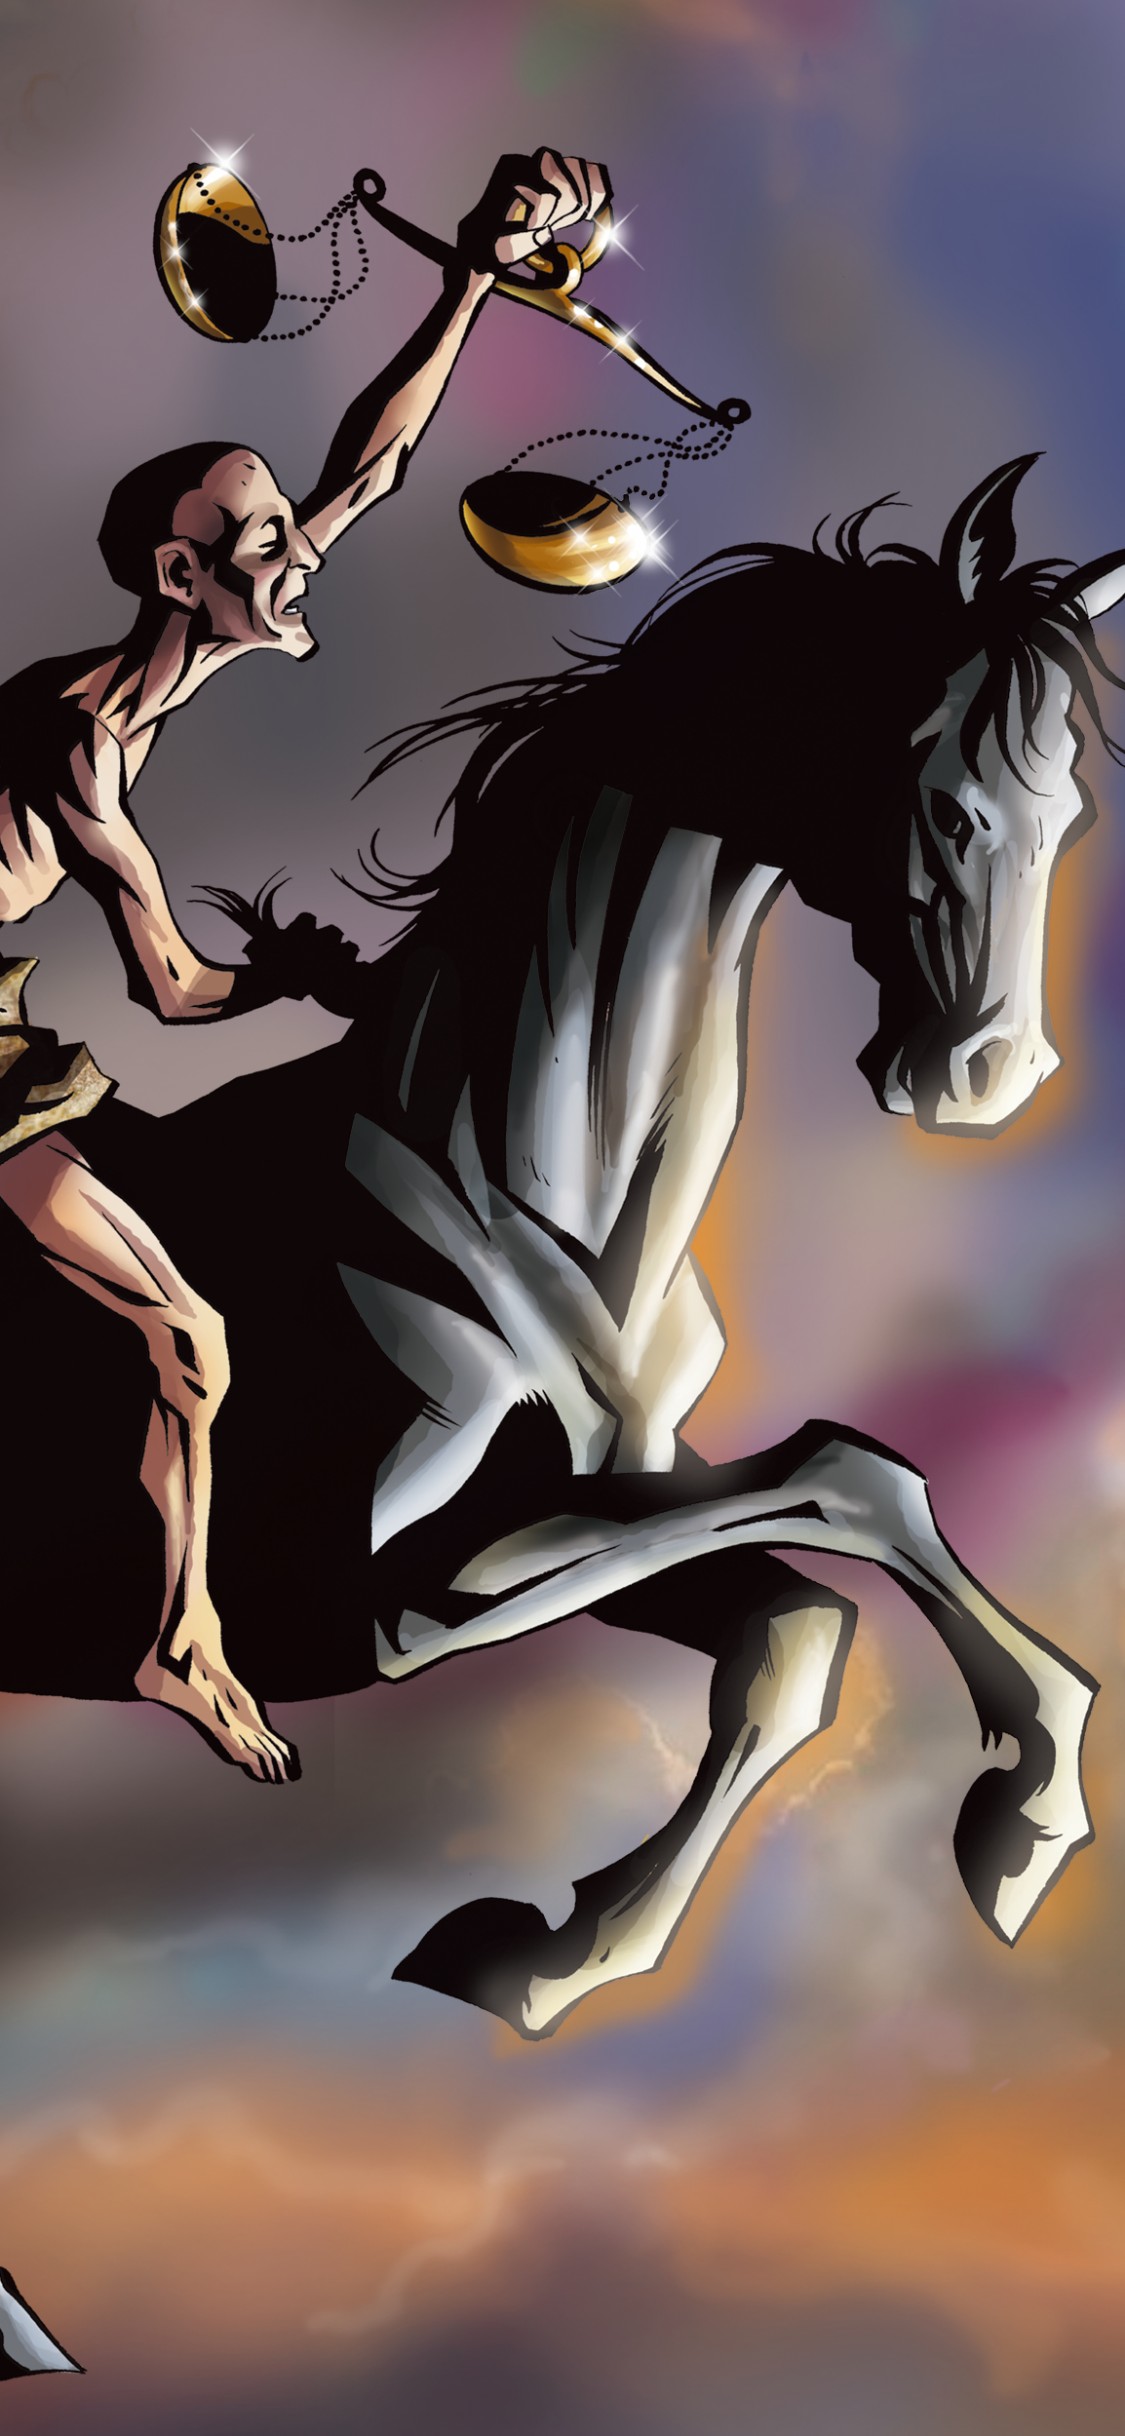 Download Four Horsemen Of The Apocalypse Lds, 4 Horsemen - Four Horsemen Of The Apocalypse , HD Wallpaper & Backgrounds